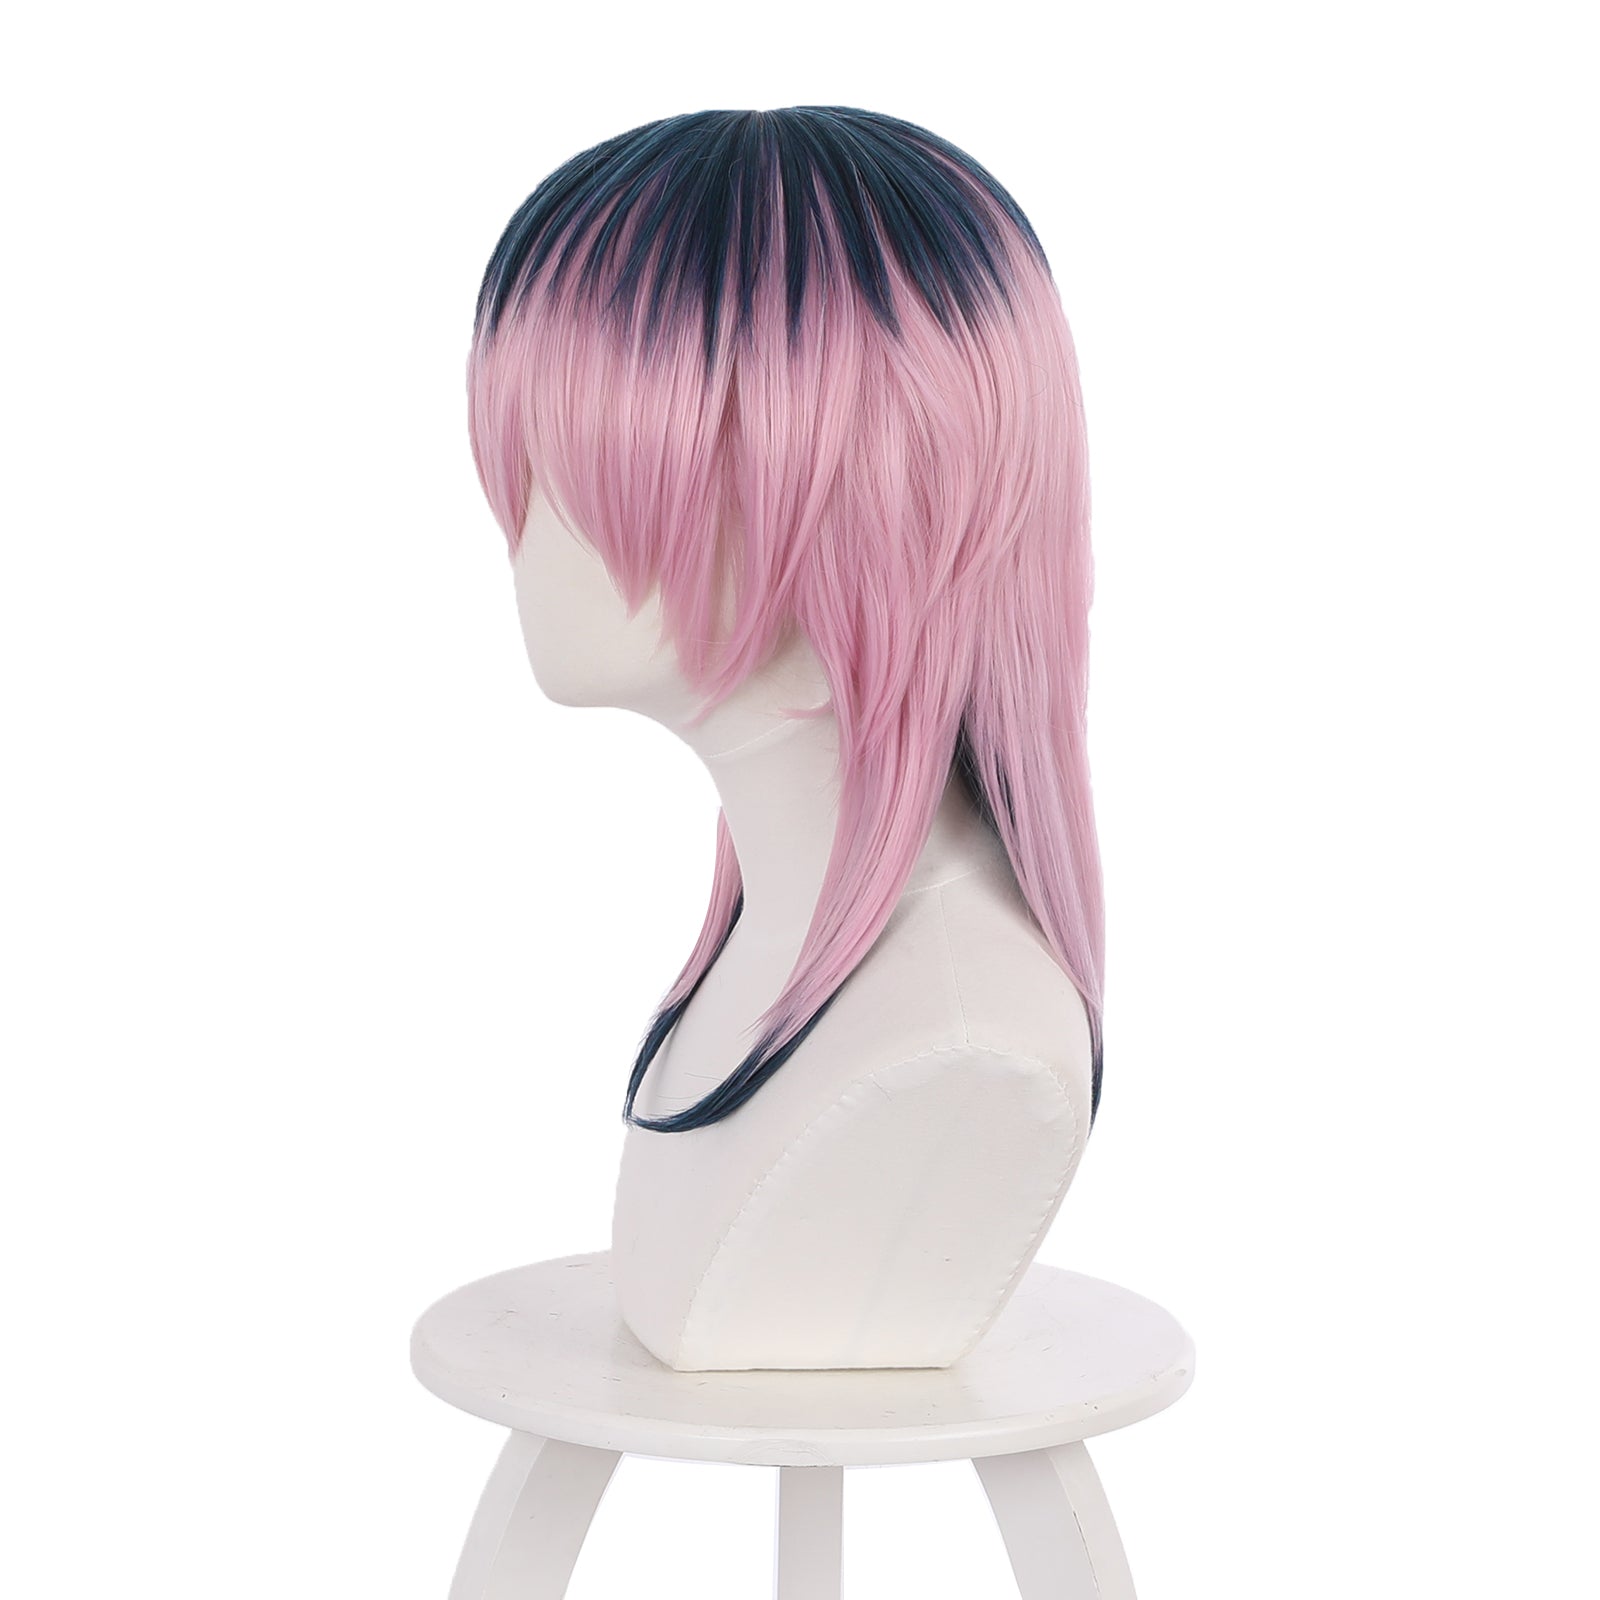 Rulercosplay Anime Tokyo Revengers Haitani Rindou Dark blue and pink Medium Cosplay Wig